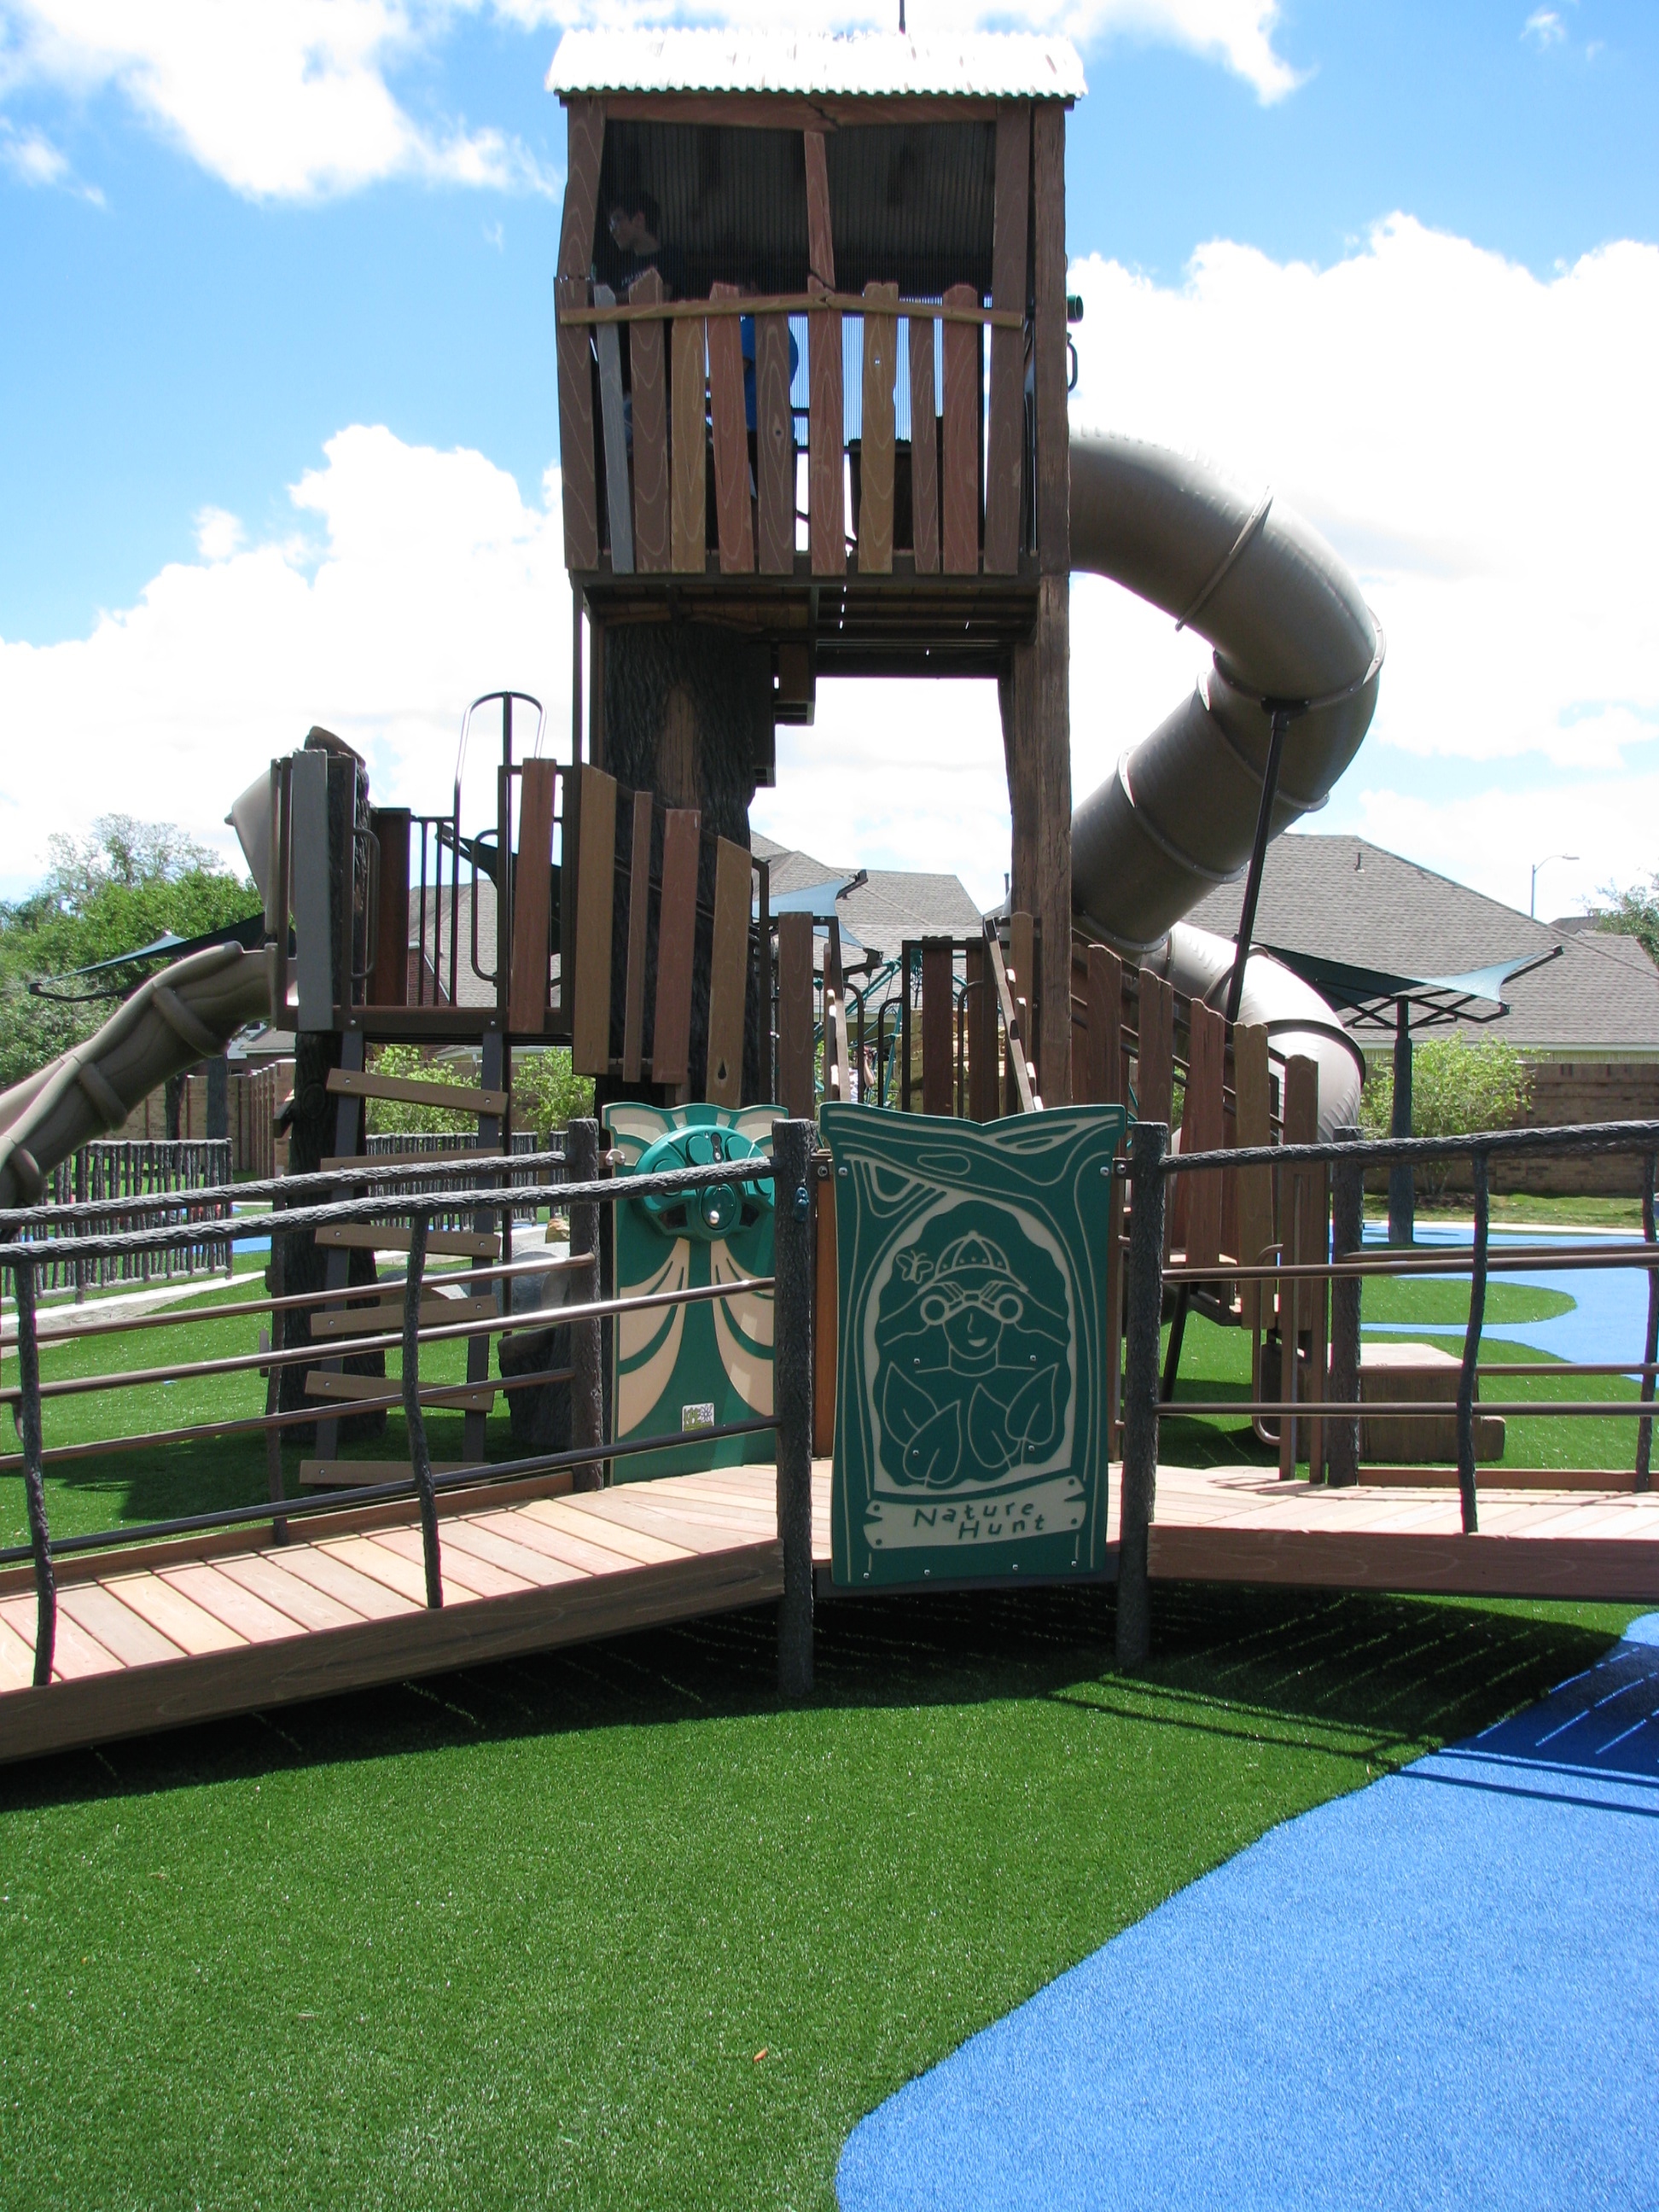 River Park Playground